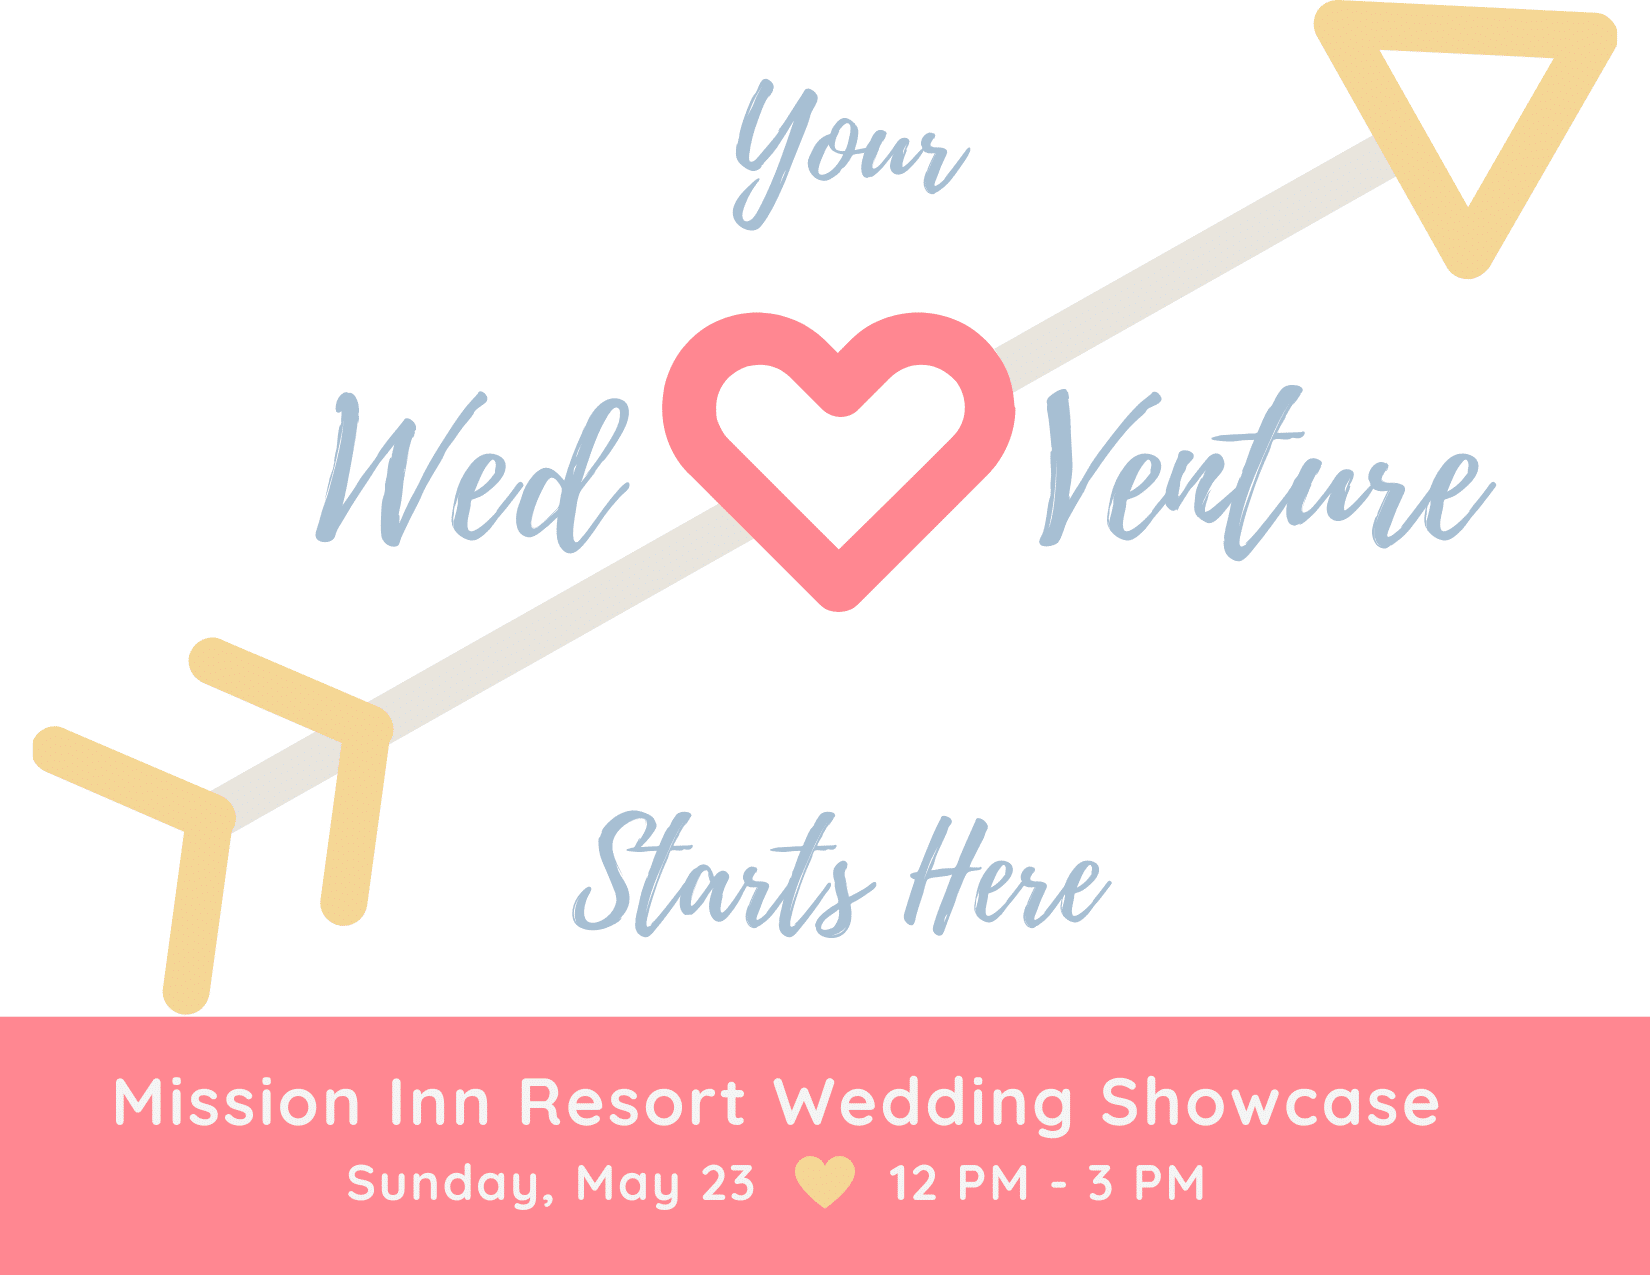 Mission Inn Resort Wedding Showcase logo